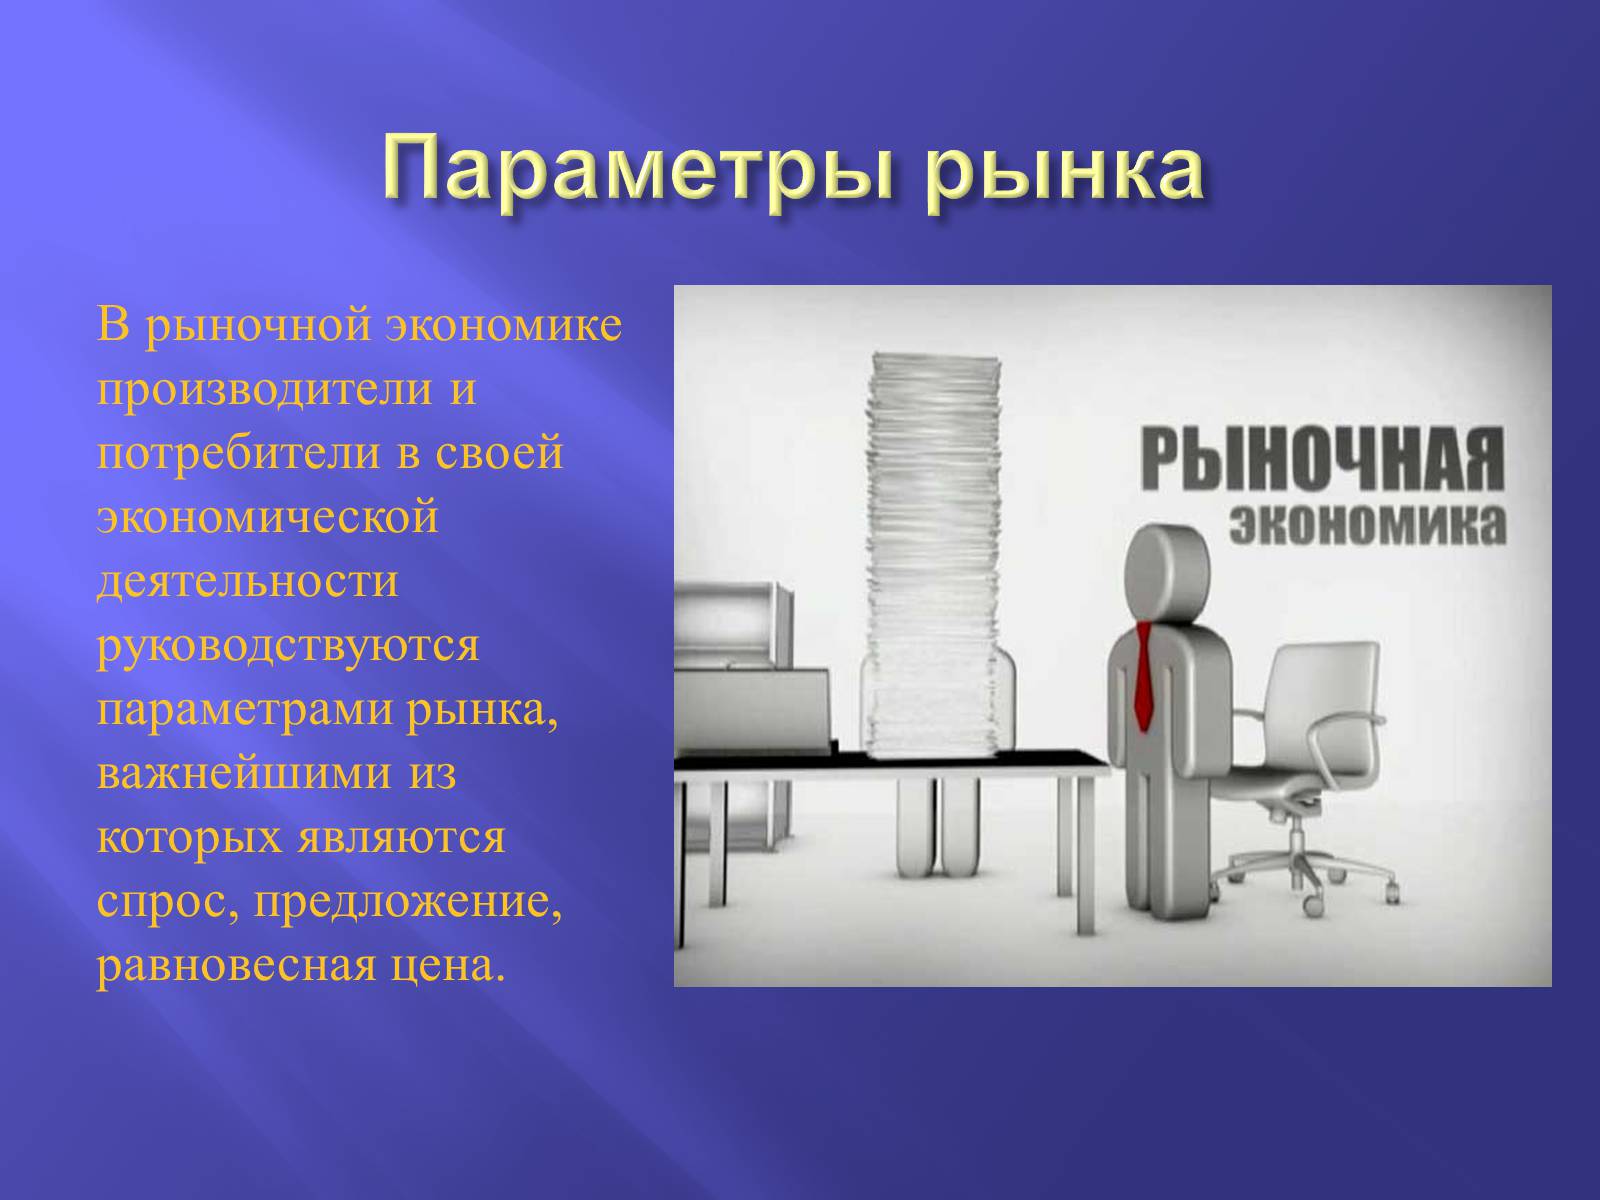 Презентація на тему «Рынок труда в Украине: проблемы становления» - Слайд #3